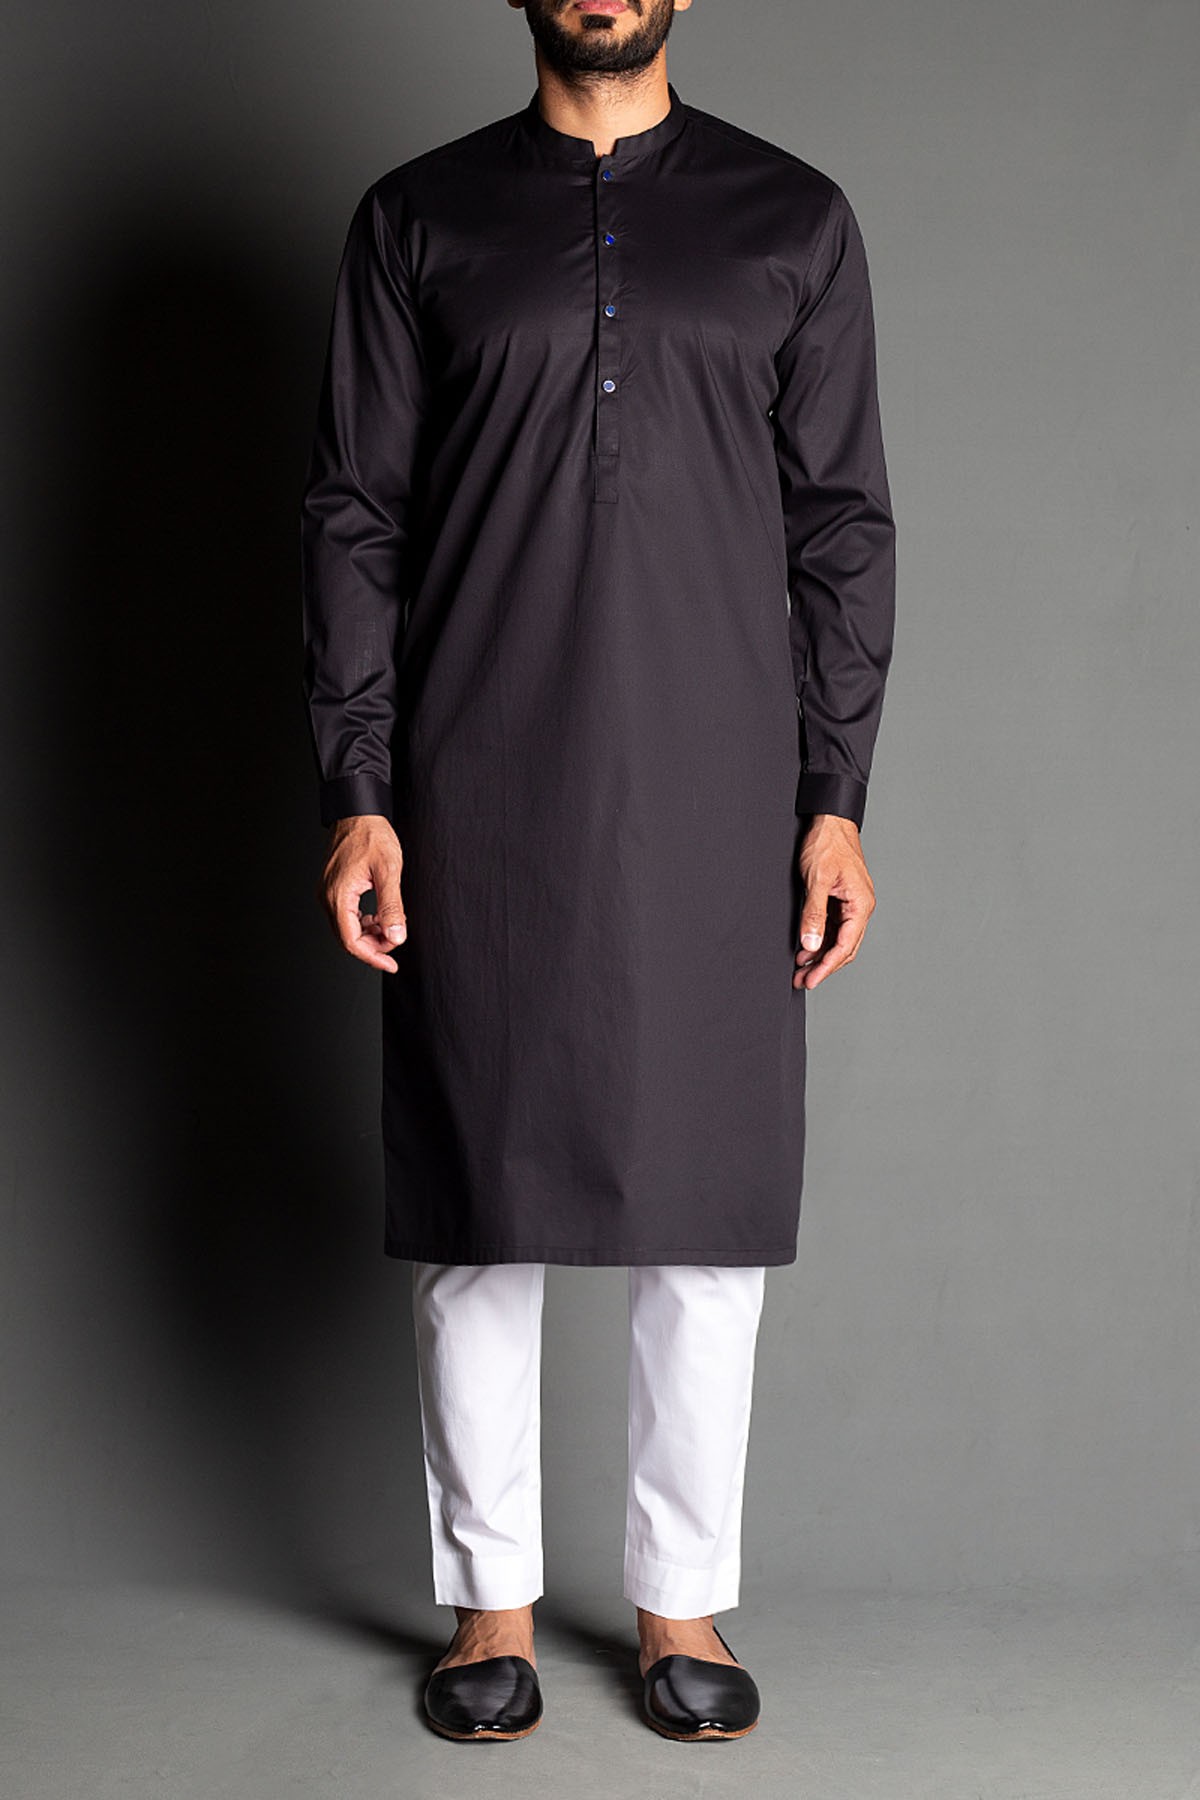 Bareezé Man - Best men’s wear collection in Pakistan